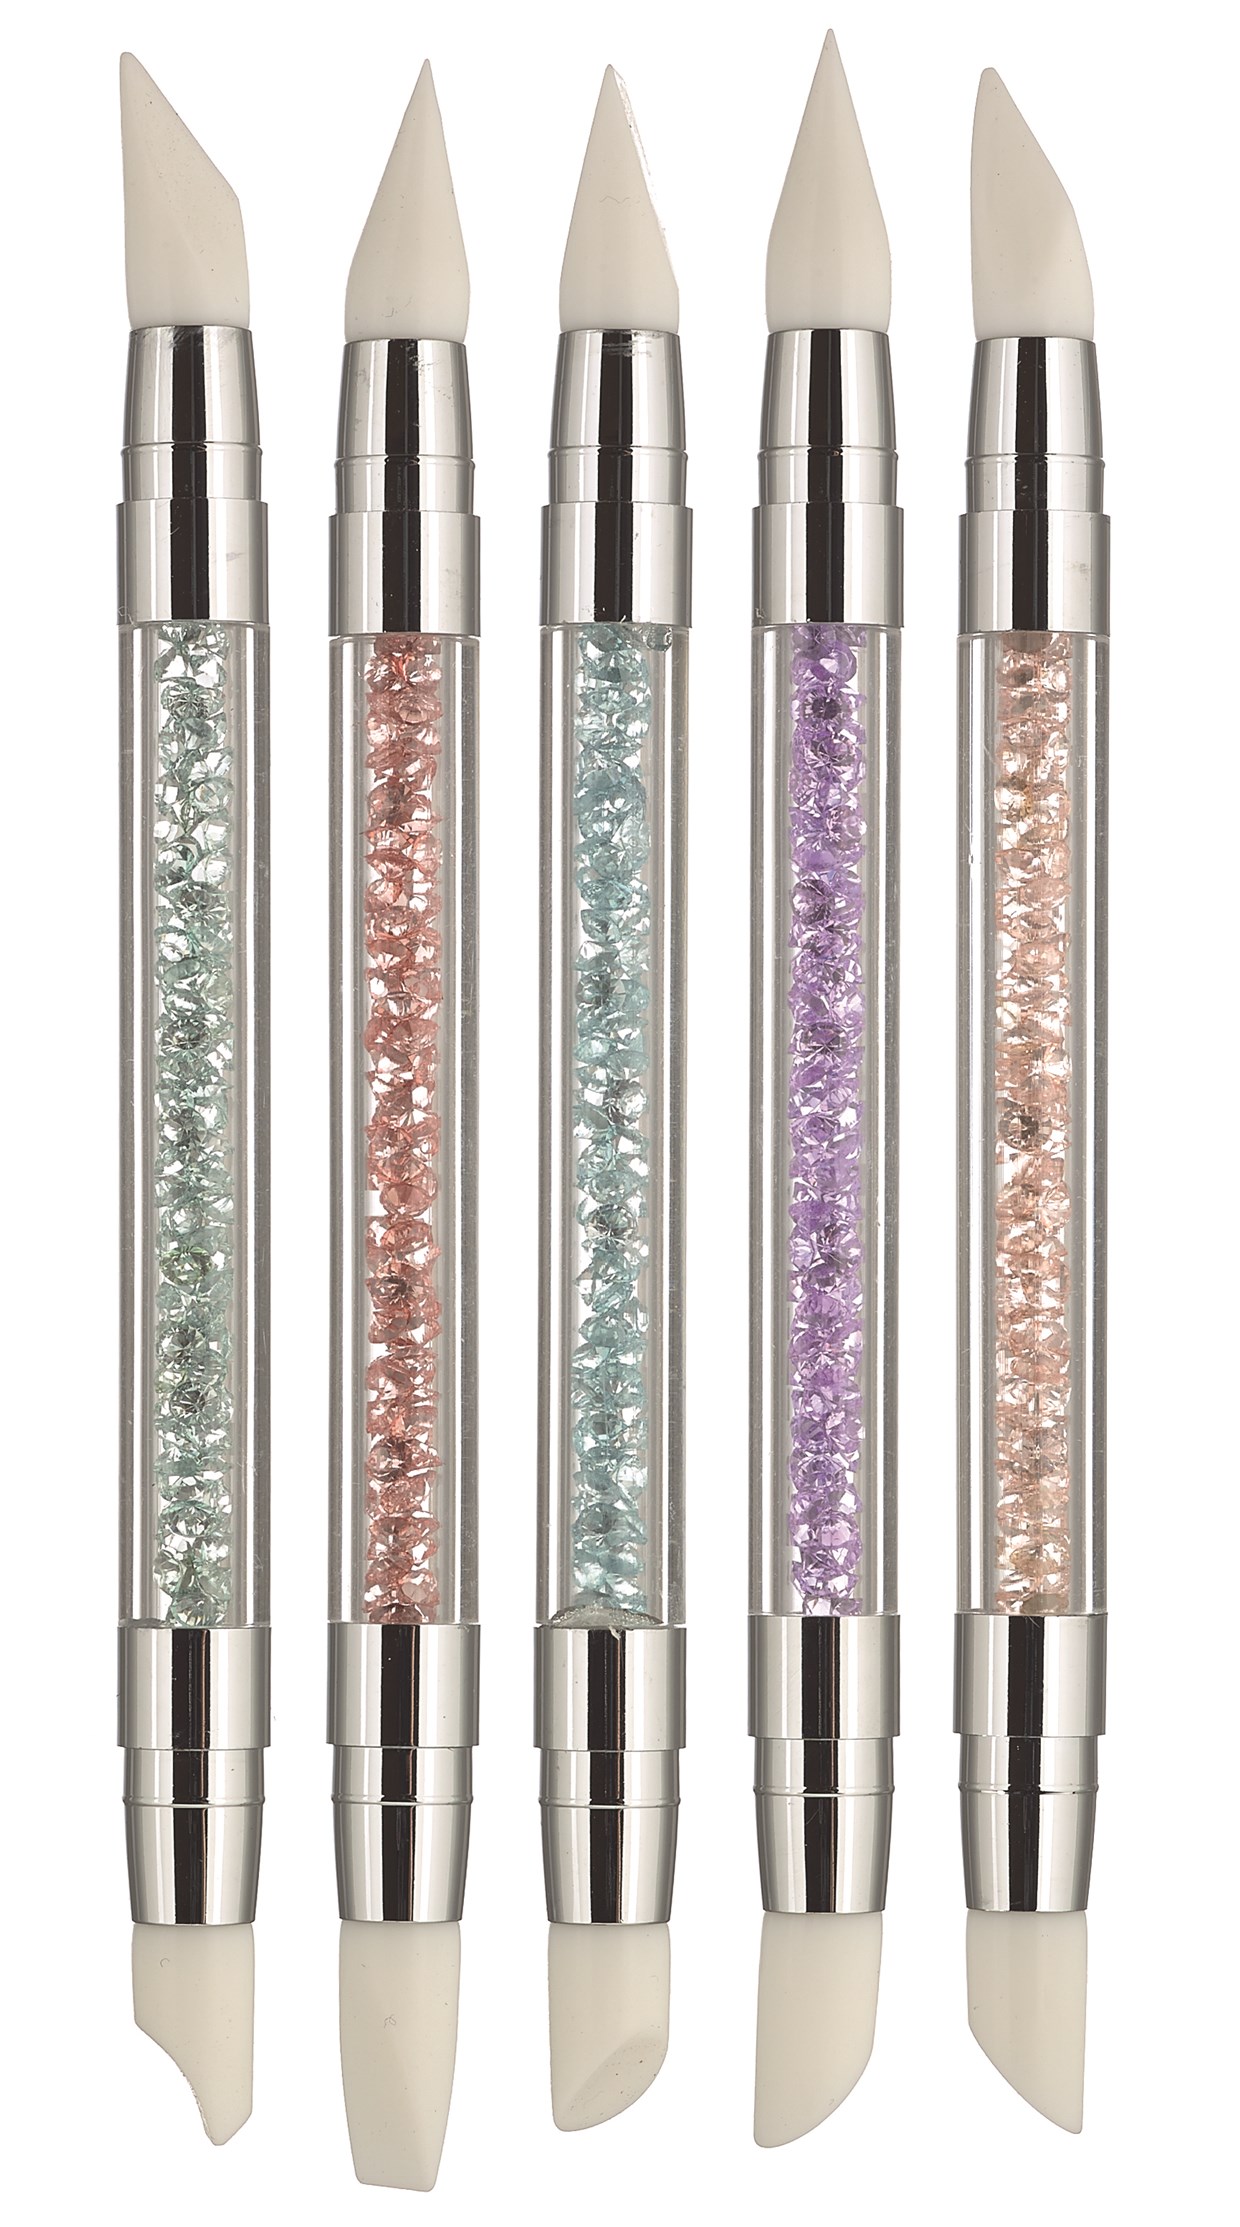 Bemiddelaar benzine bestuurder Art Nail Art Pen Kit Diamond kopen | Beauty Plaza